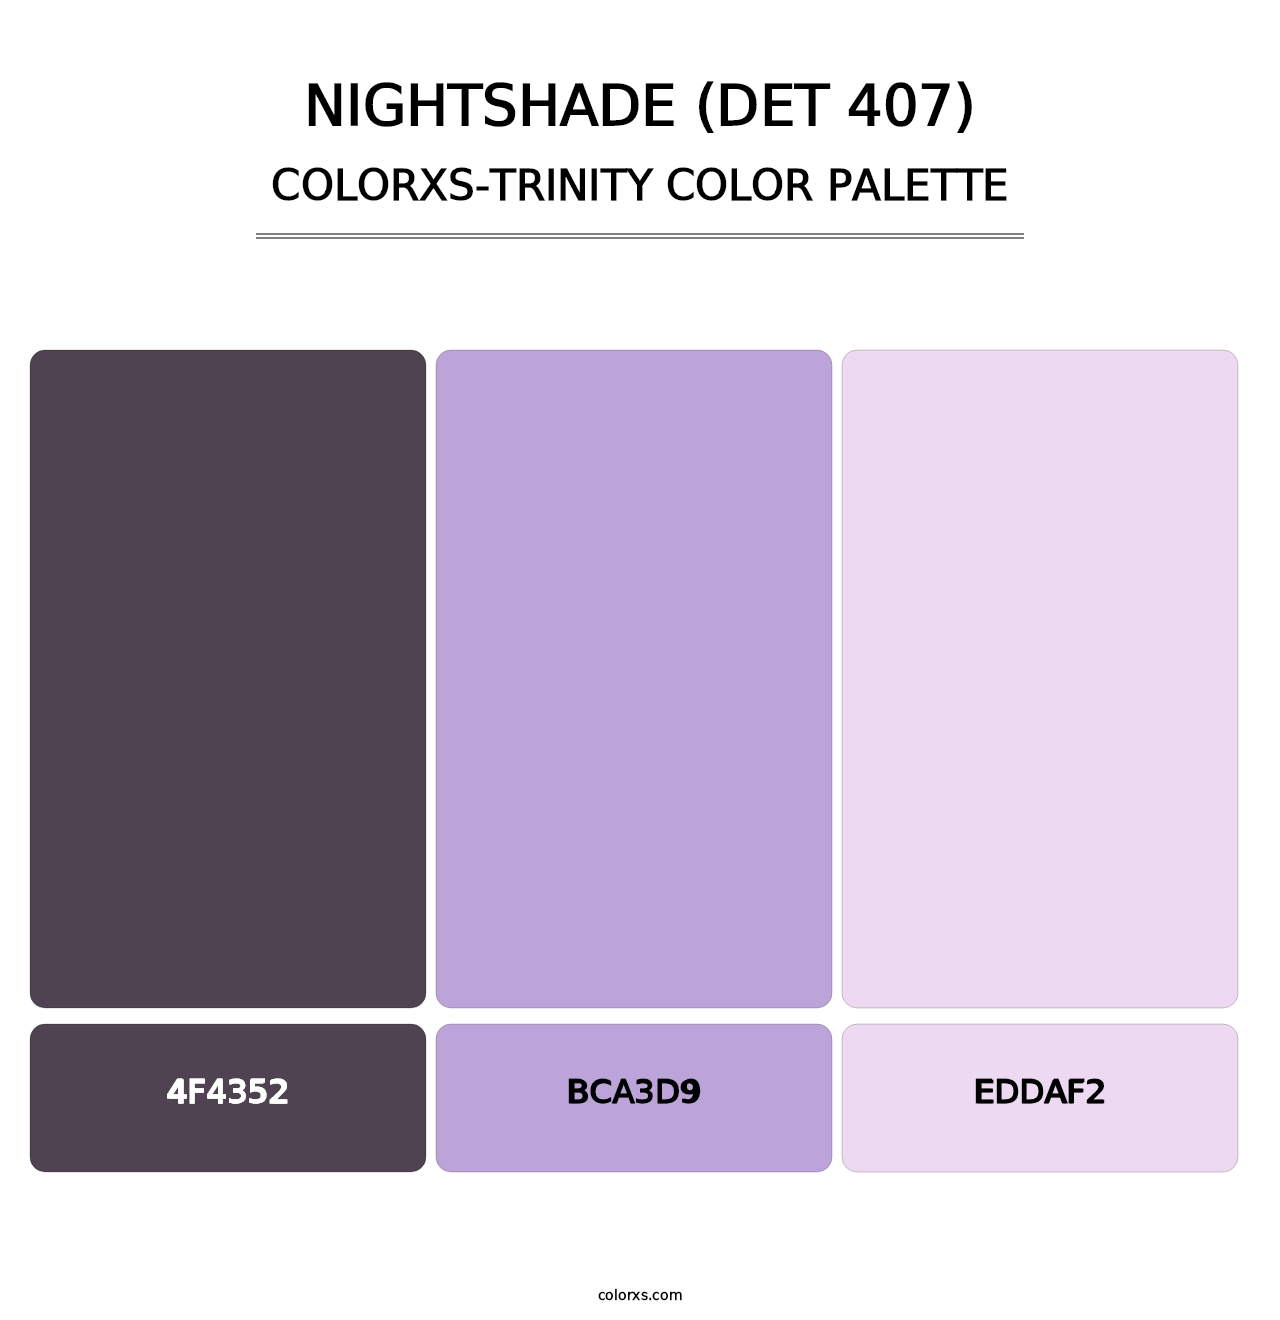 Nightshade (DET 407) - Colorxs Trinity Palette